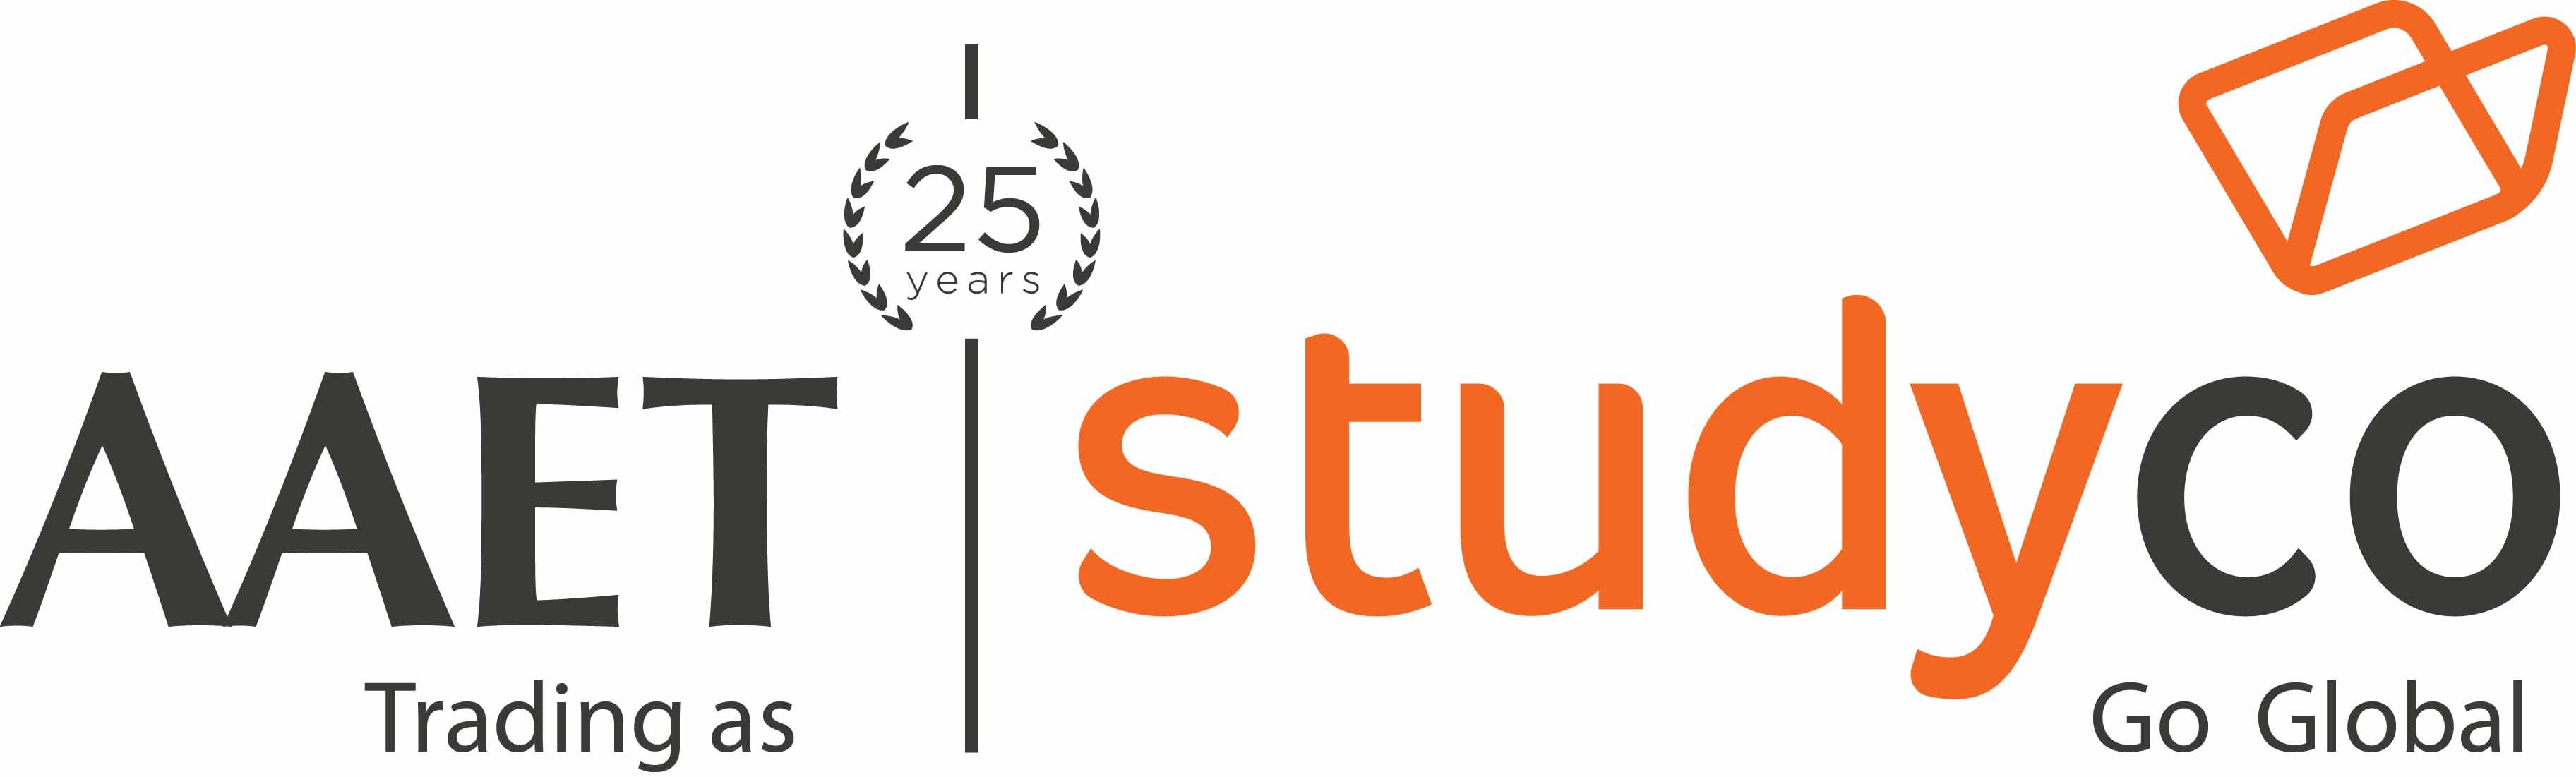 StudyCo Logo